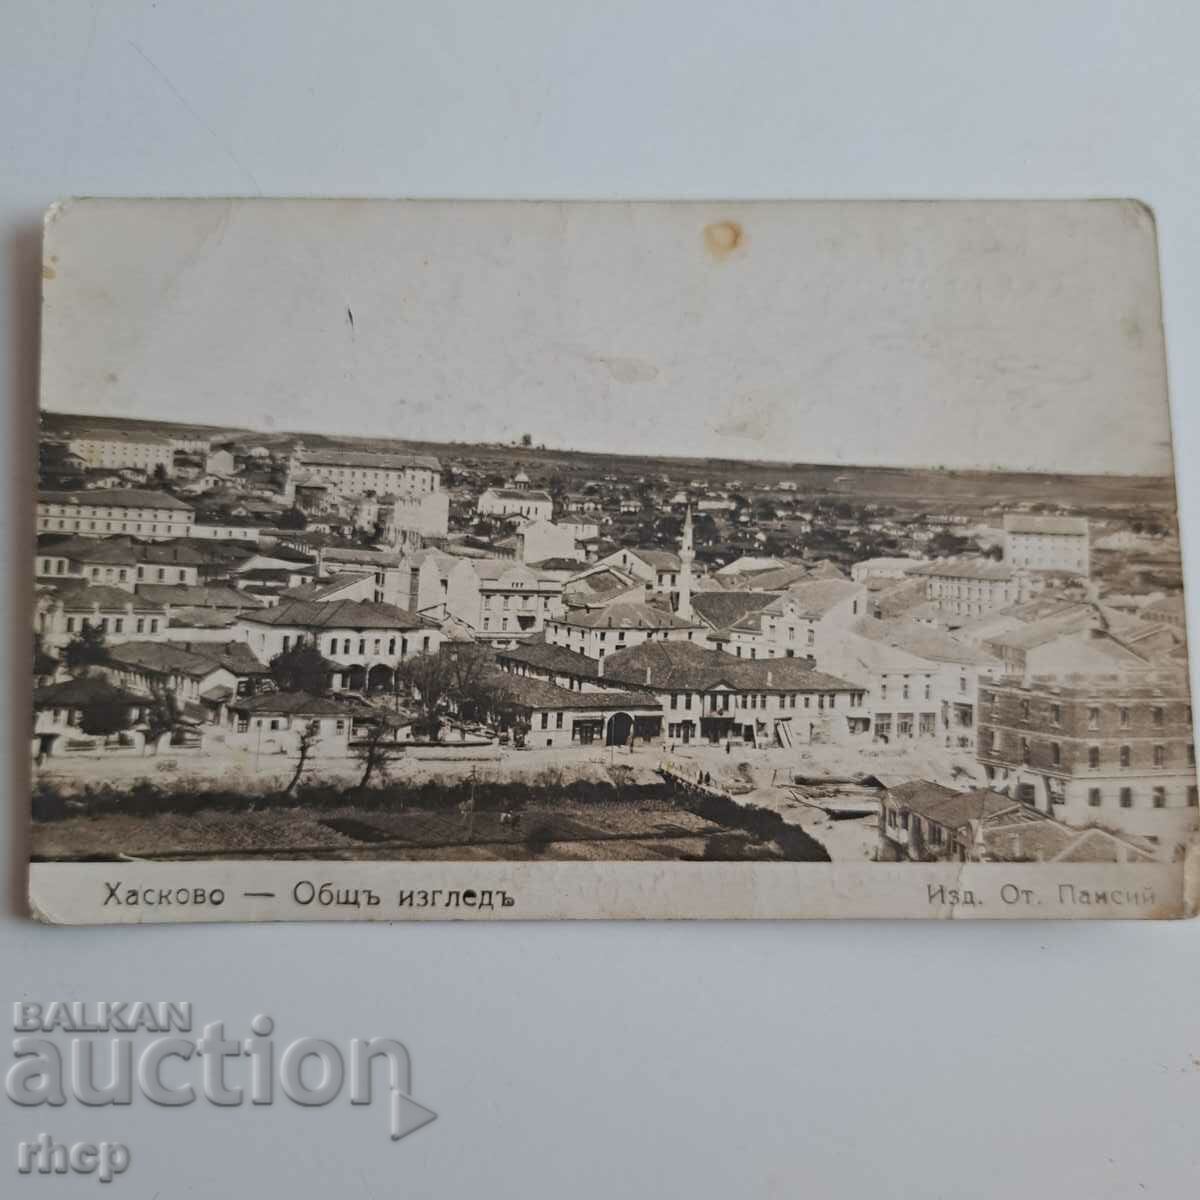 Haskovo 1926. Old photo postcard Kingdom of Bulgaria